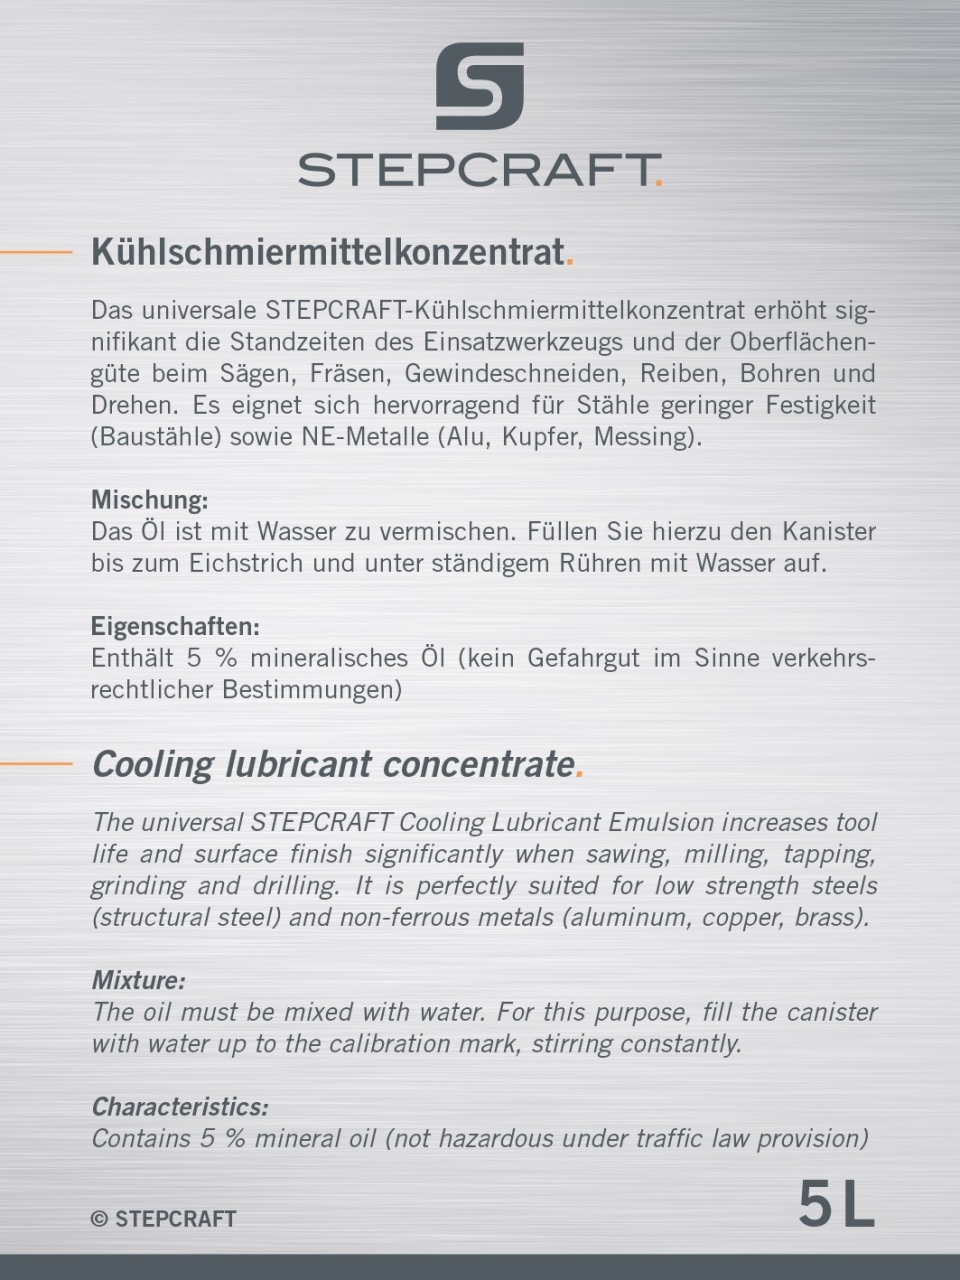 STEPCRAFT-Kühlschmieremulsion 5L